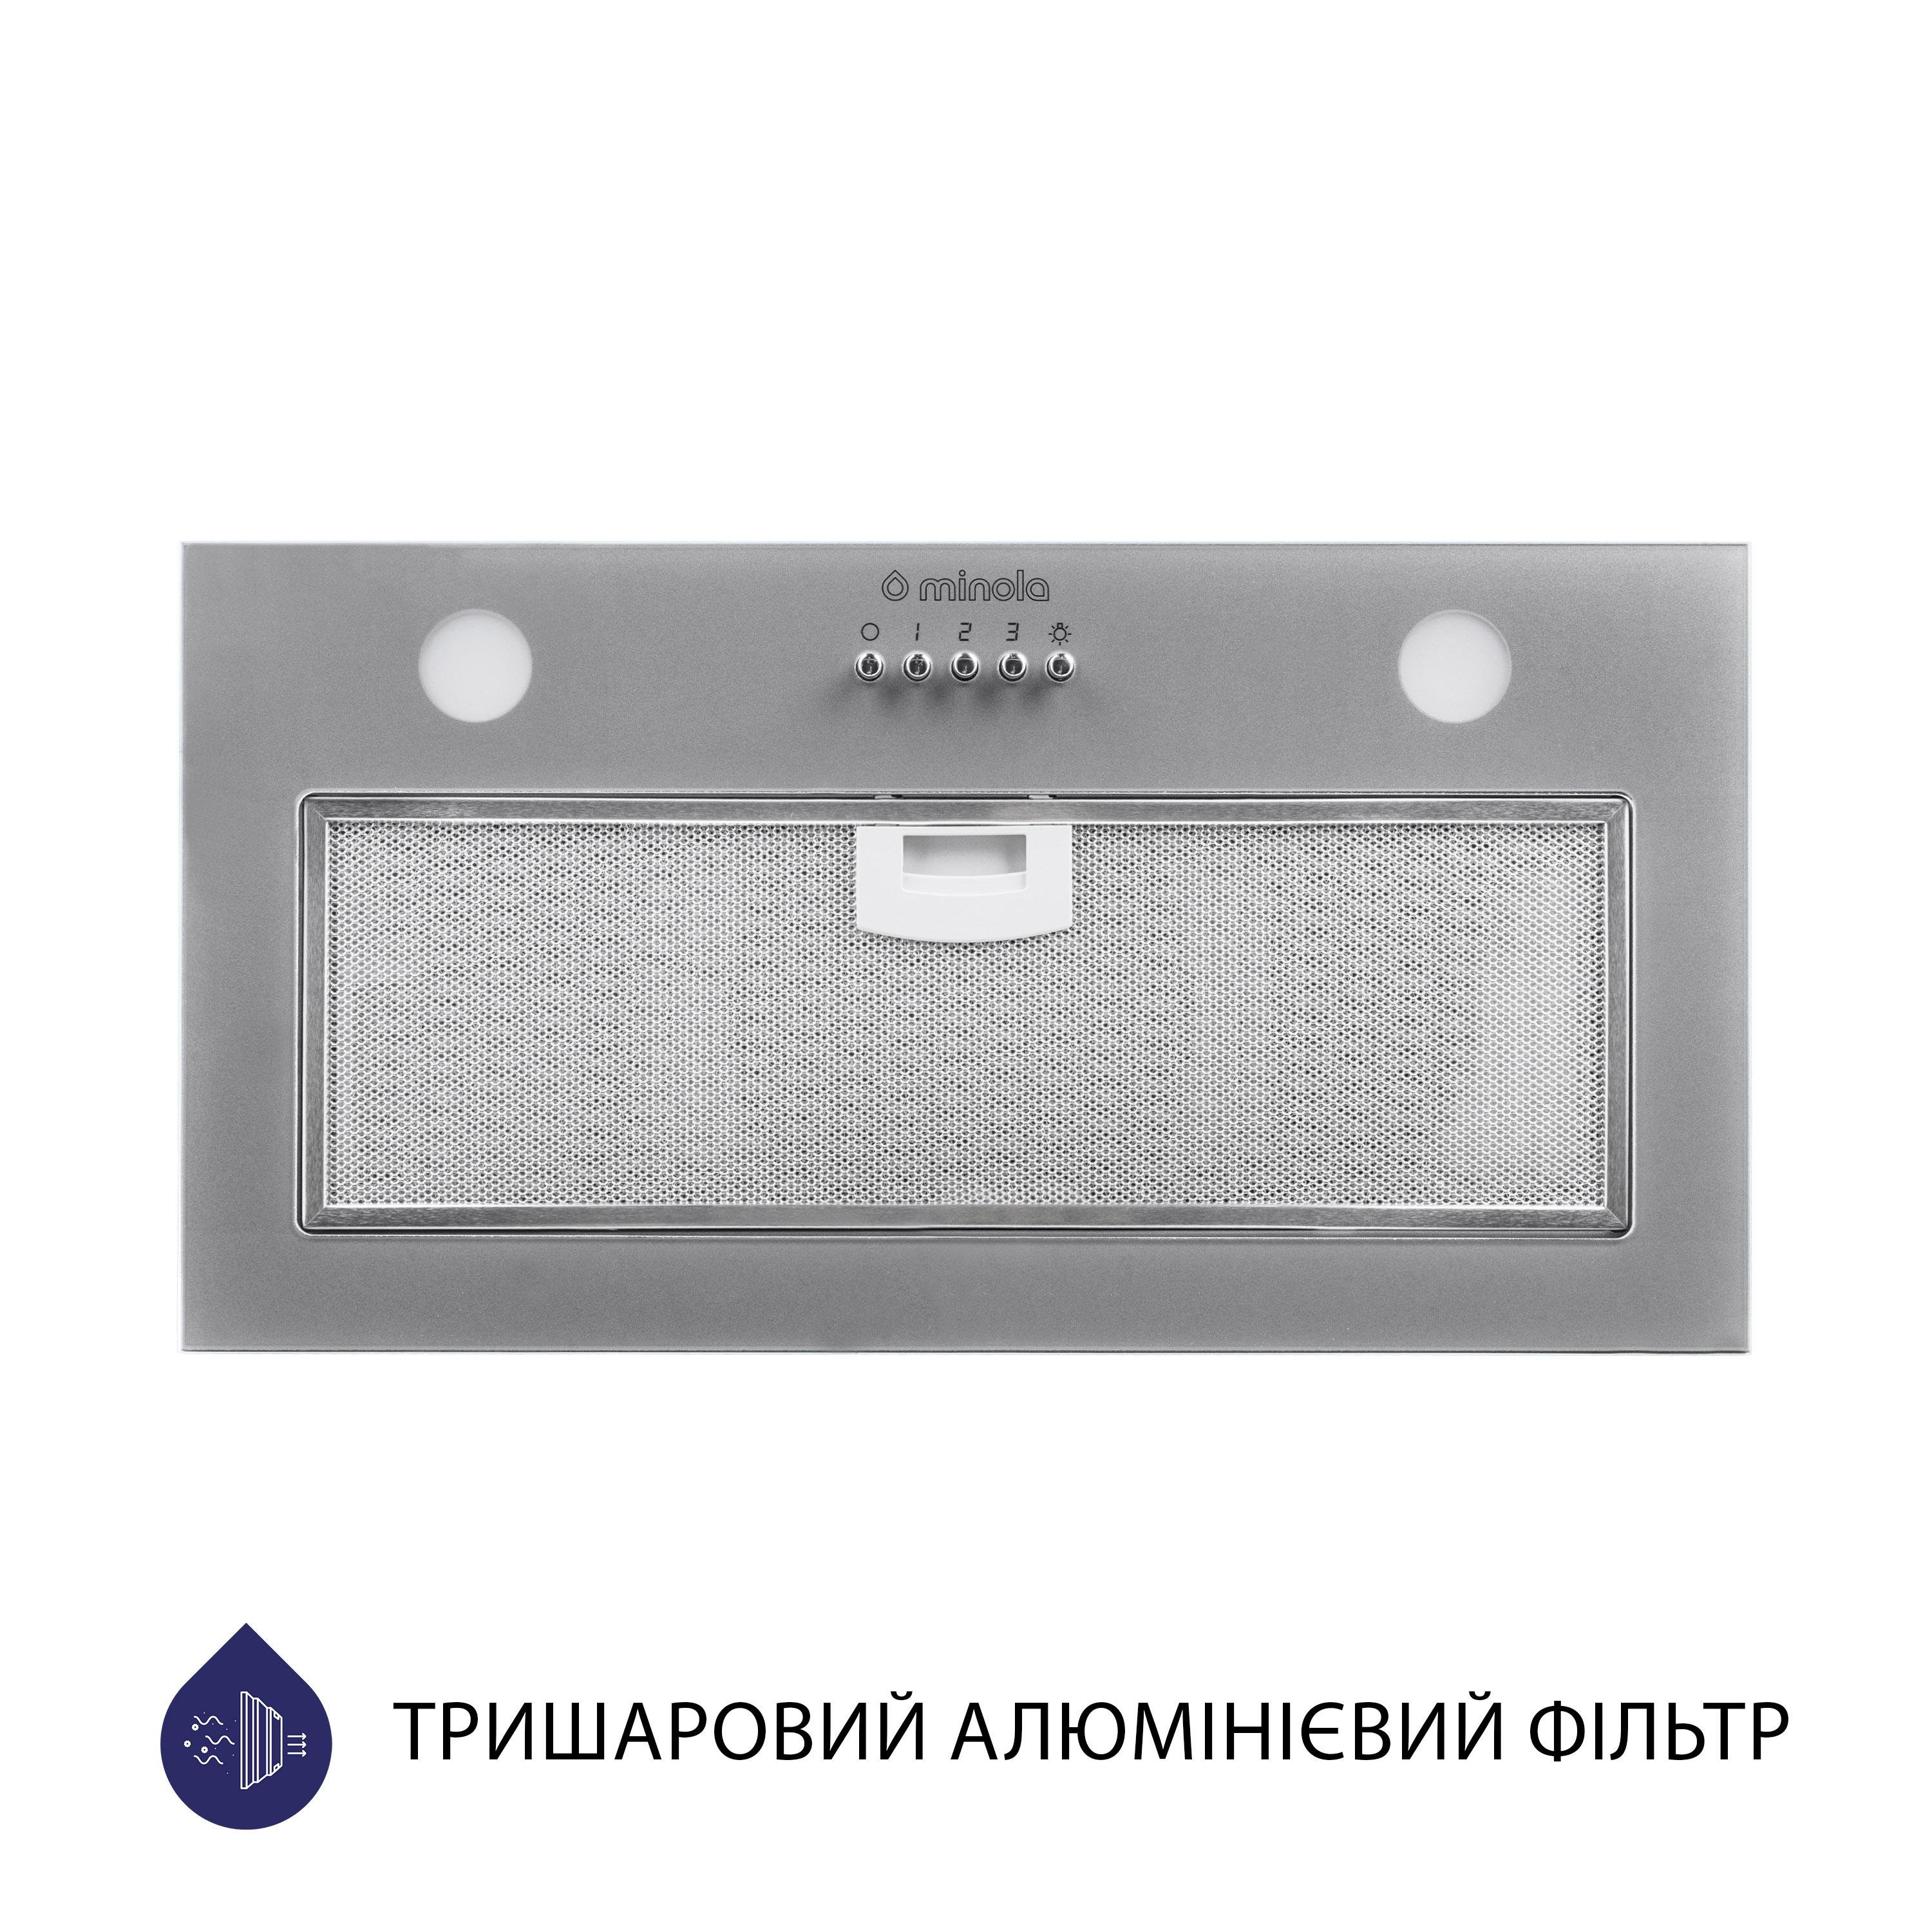 продаём Minola HBI 5262 GR GLASS 700 LED в Украине - фото 4